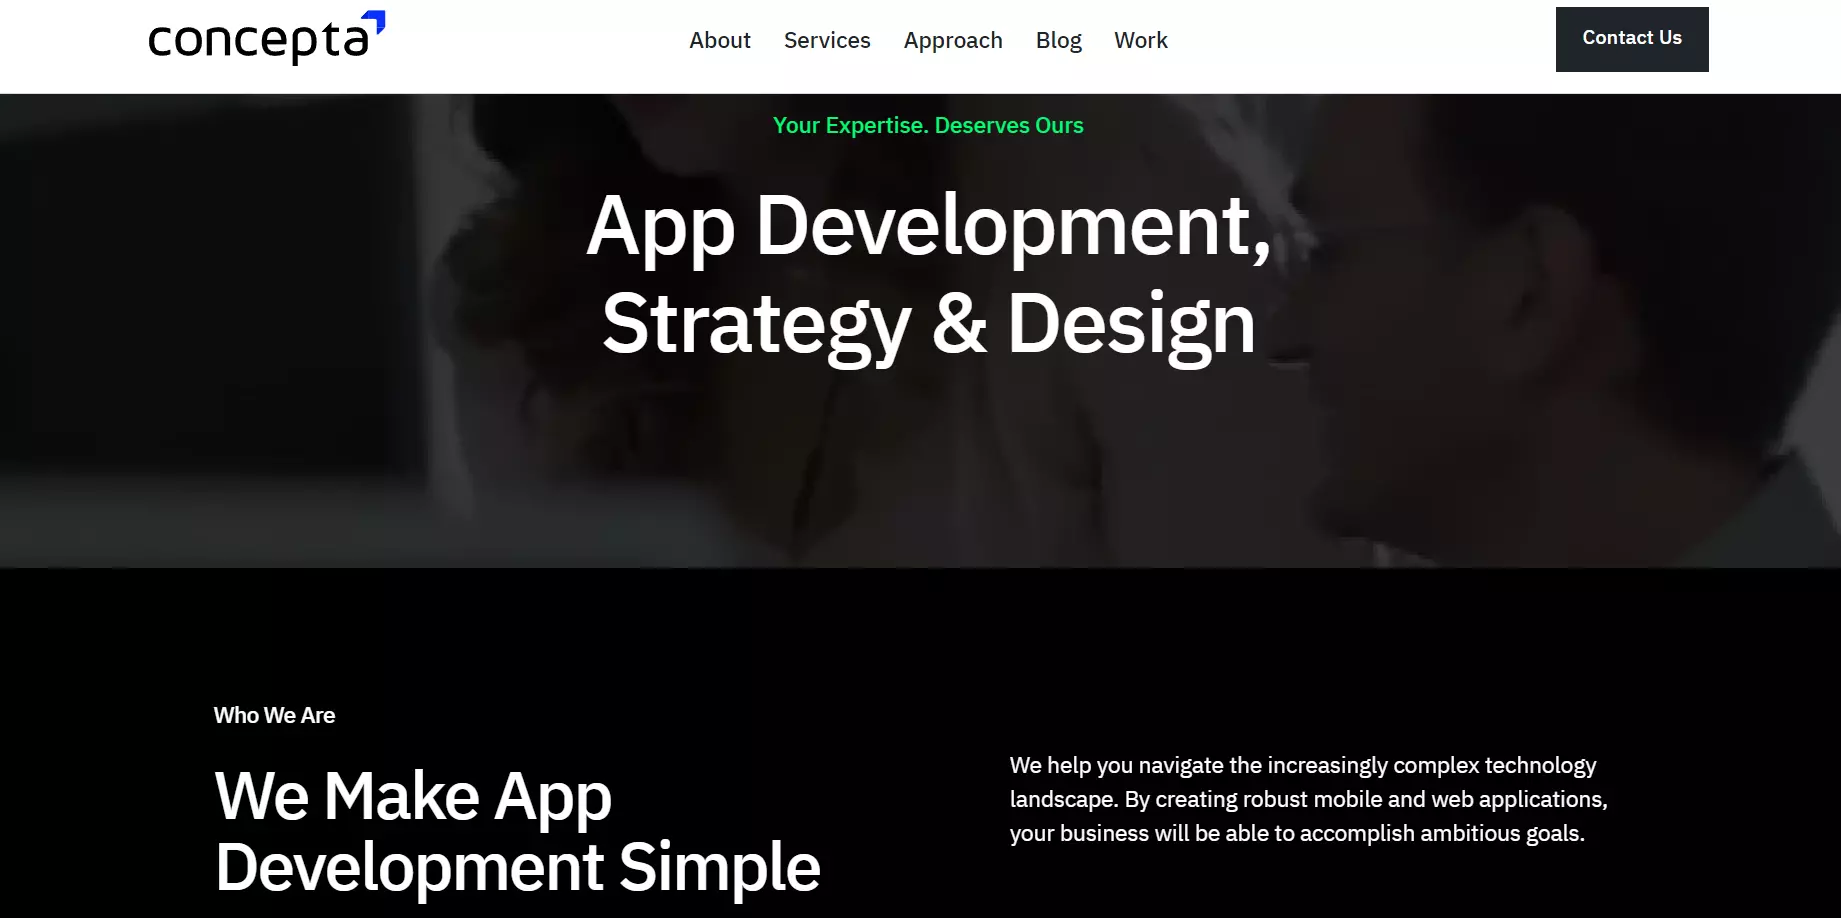 Concepta-Mobile App Development Companies in Florida